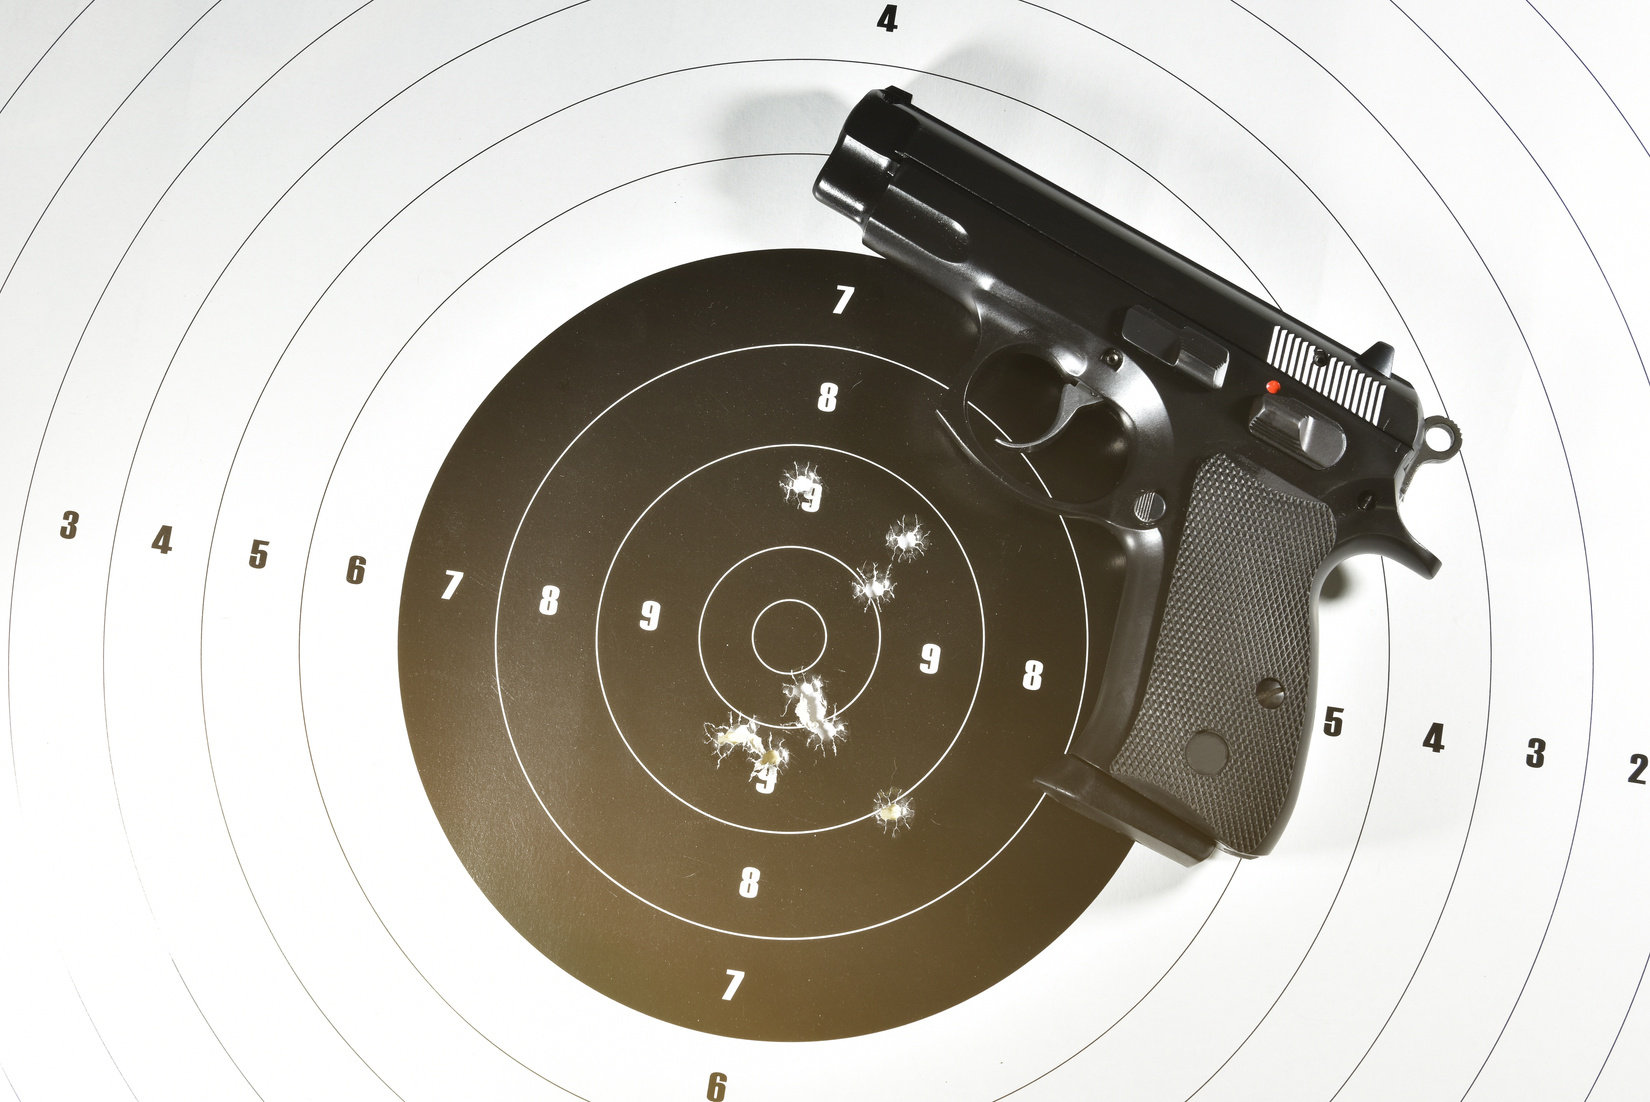 Handgun and Shooting Target Flatlay